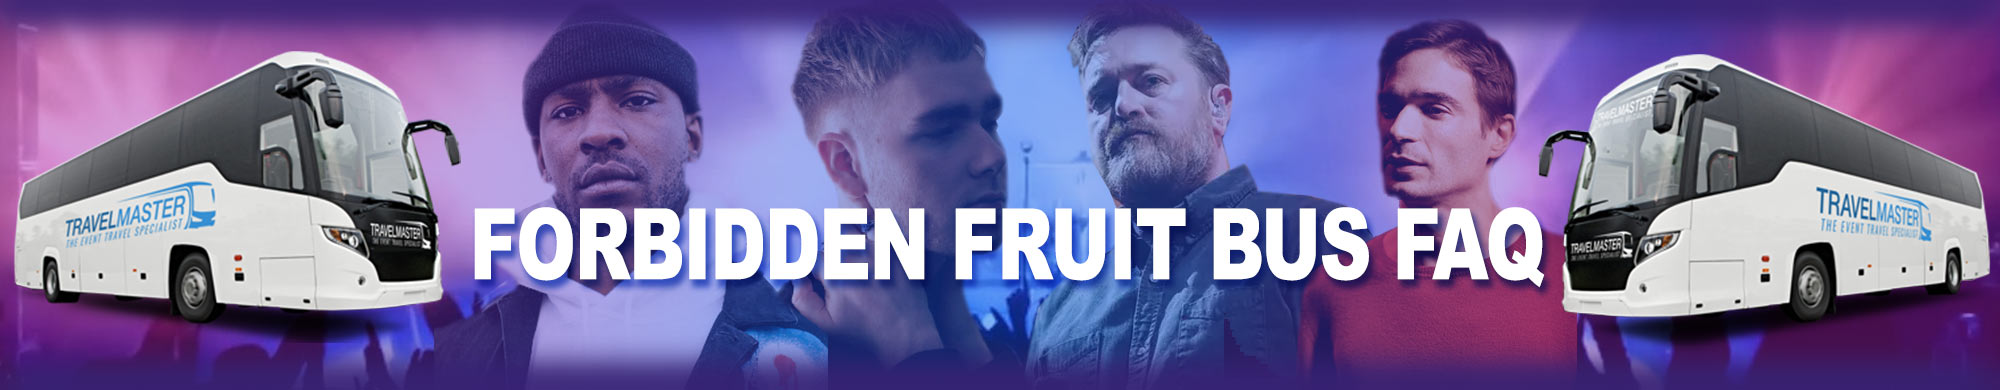 Bus to Forbidden Fruit FAQ